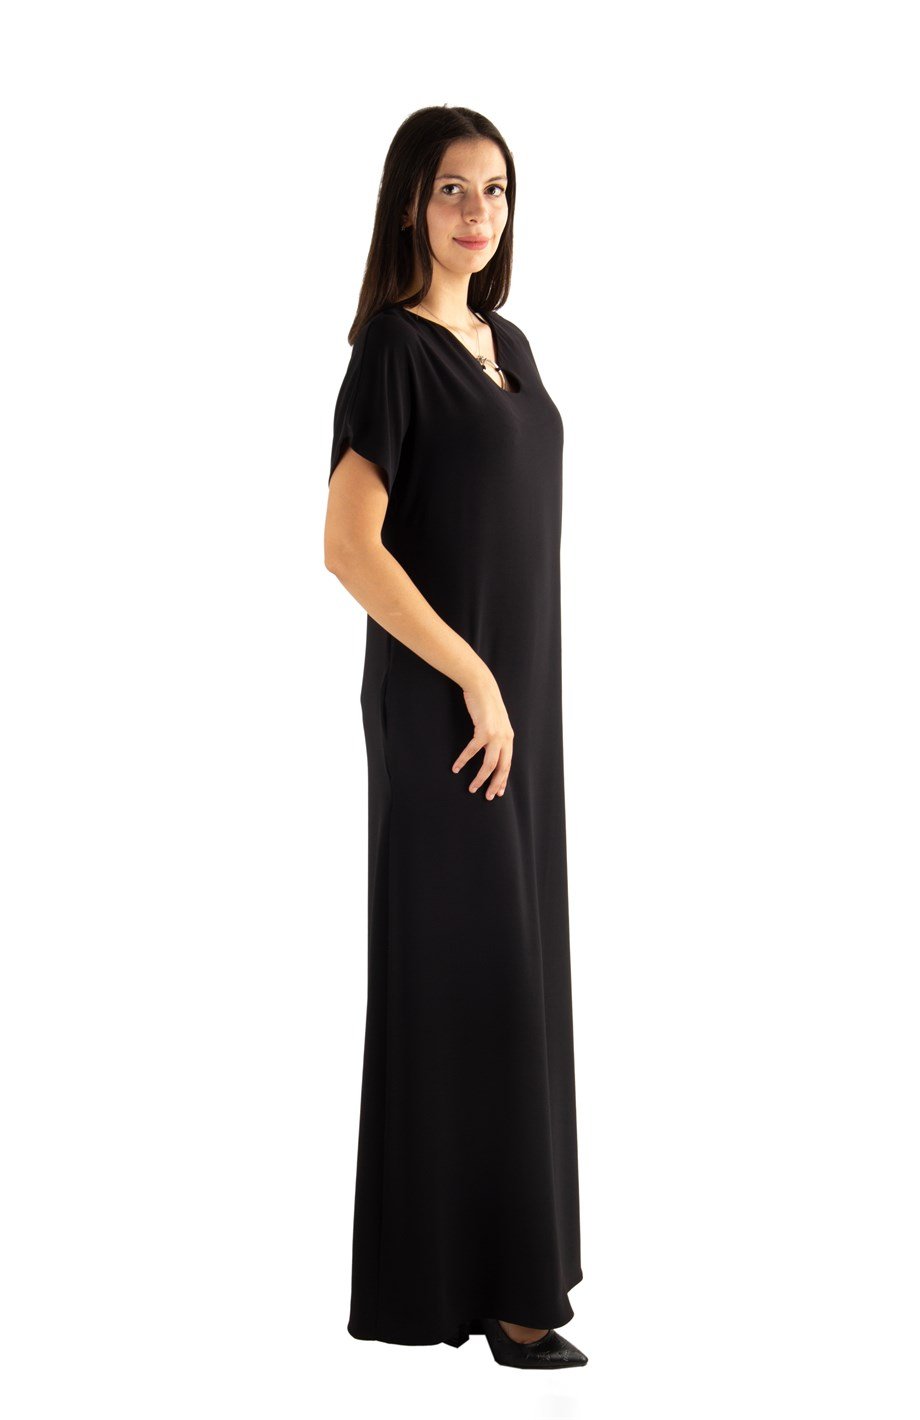 Ring Detail Long Big Size Dress - Black - Wholesale Womens